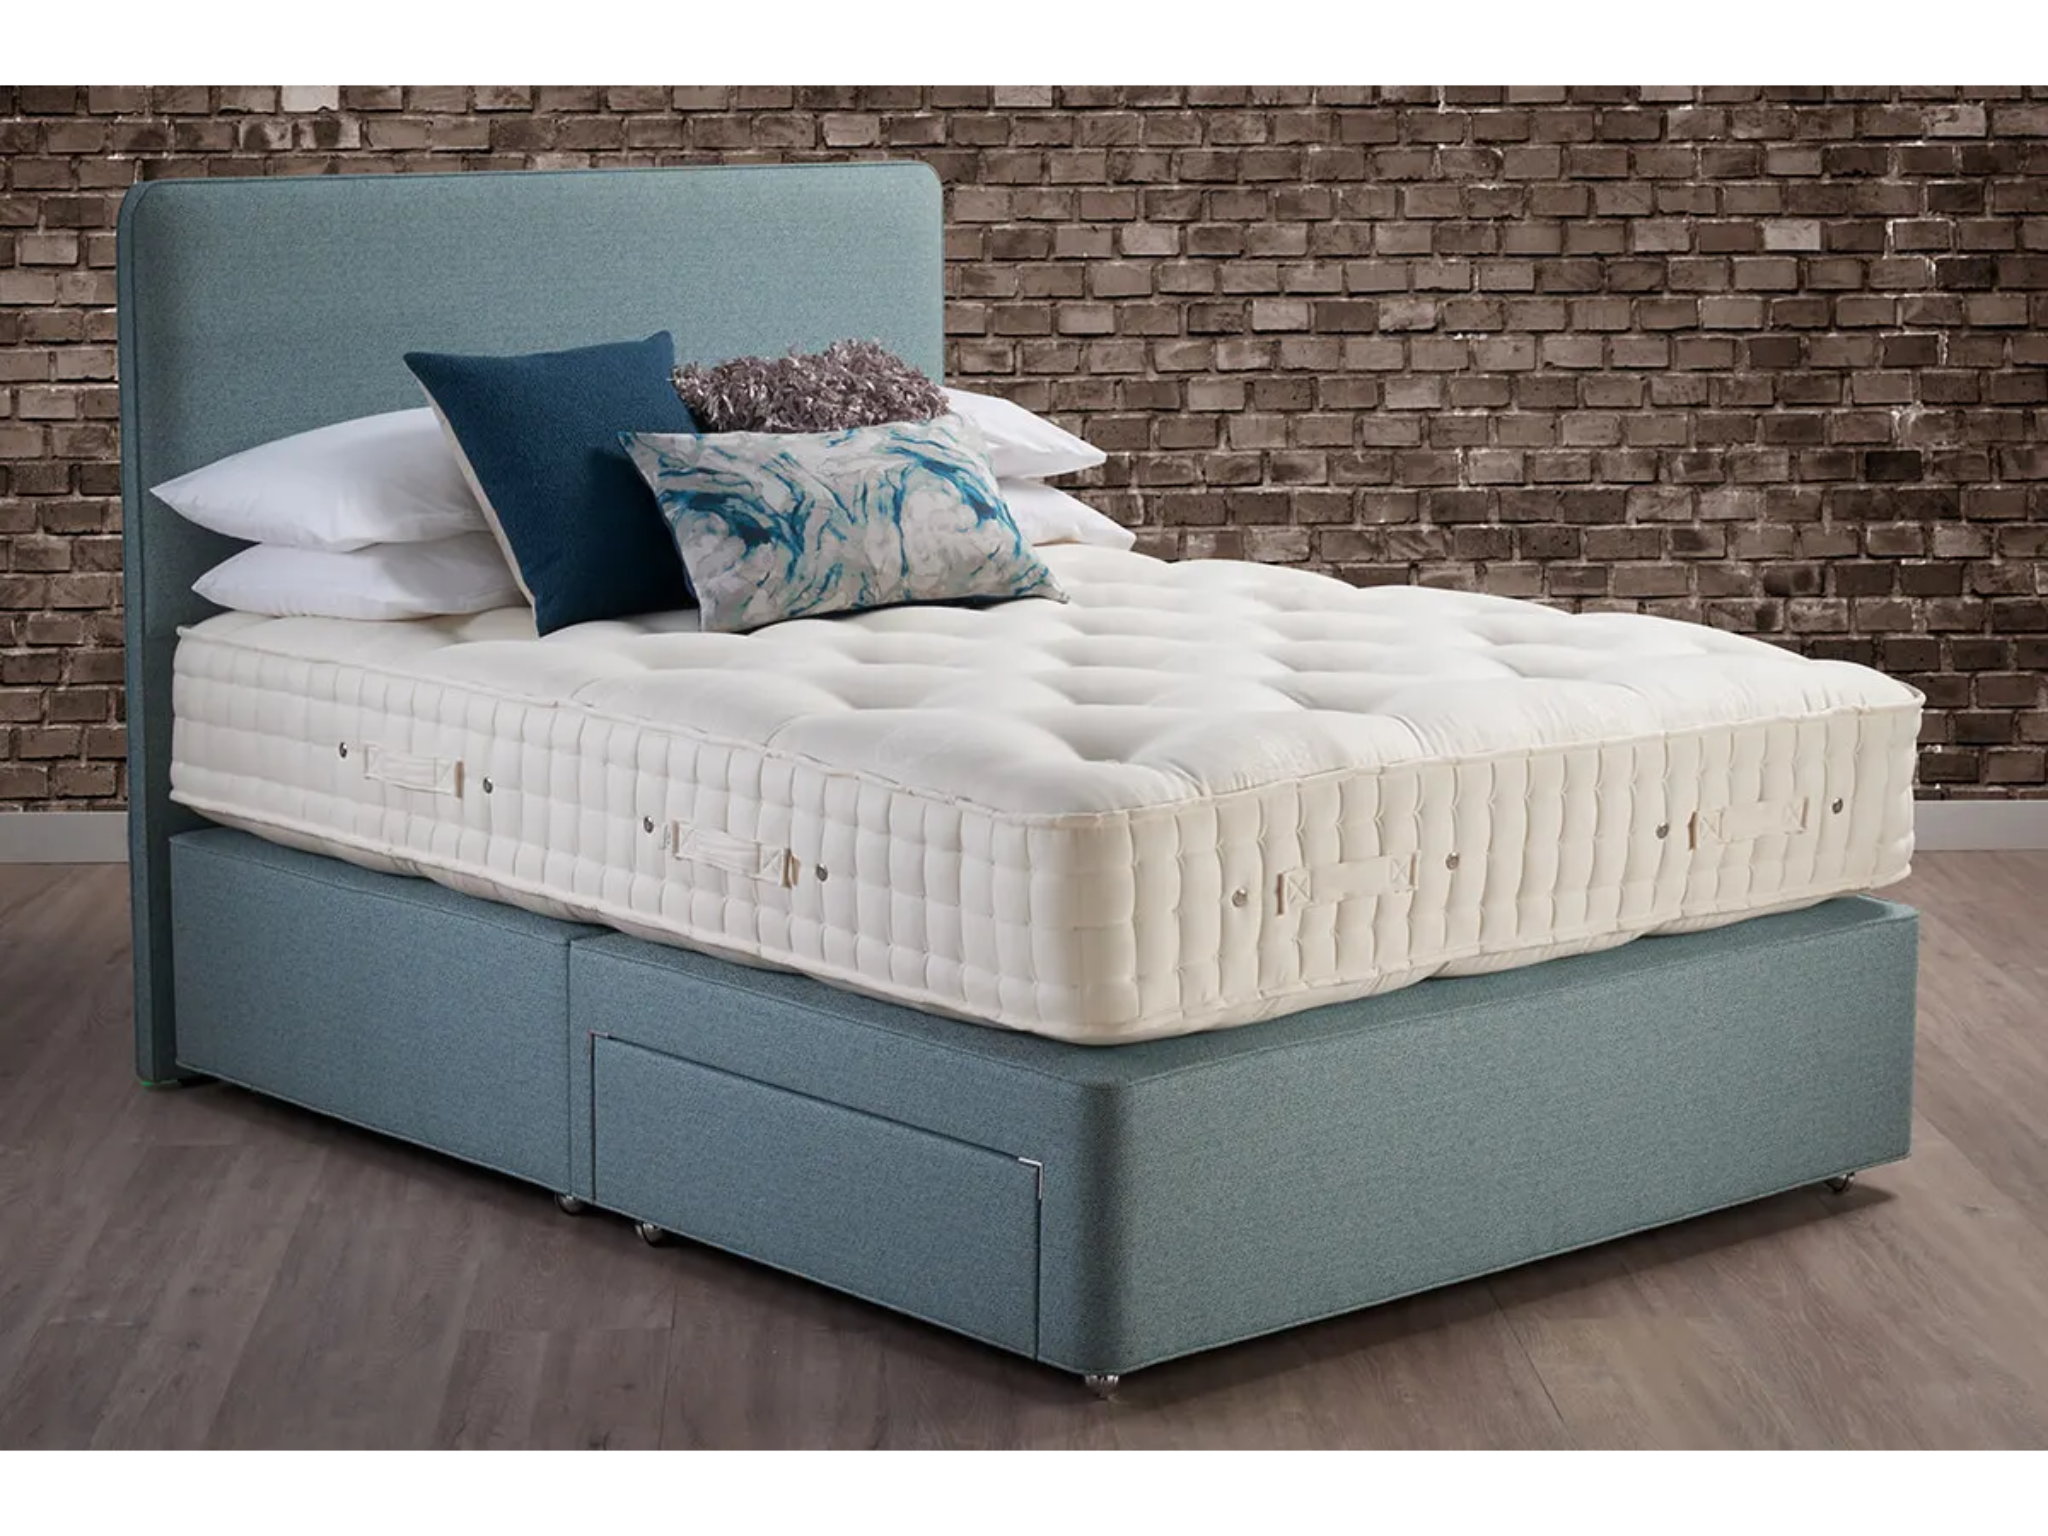 Hypnos-wool-origins-6-mattress-indybest-review.png